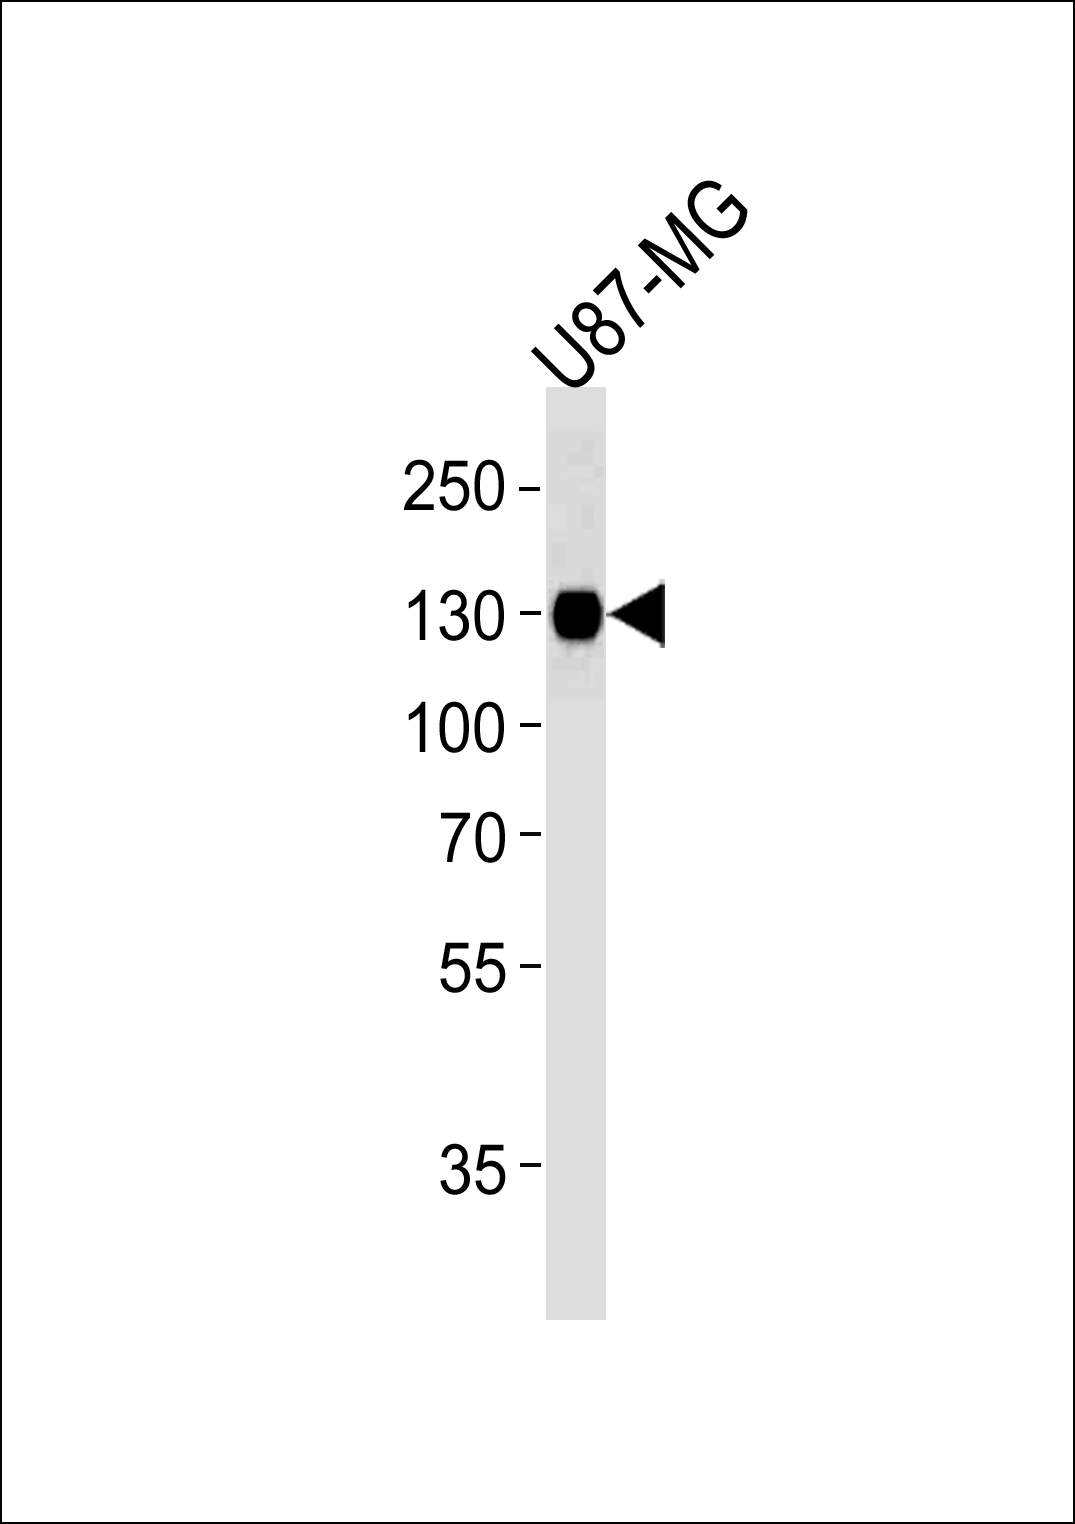 ITGB1 Antibody (Cat. #AM2241b) western blot analysis in U87-MG cell line lysates (35?g/lane).This demonstrates the ITGB1 antibody detected the ITGB1 protein (arrow).